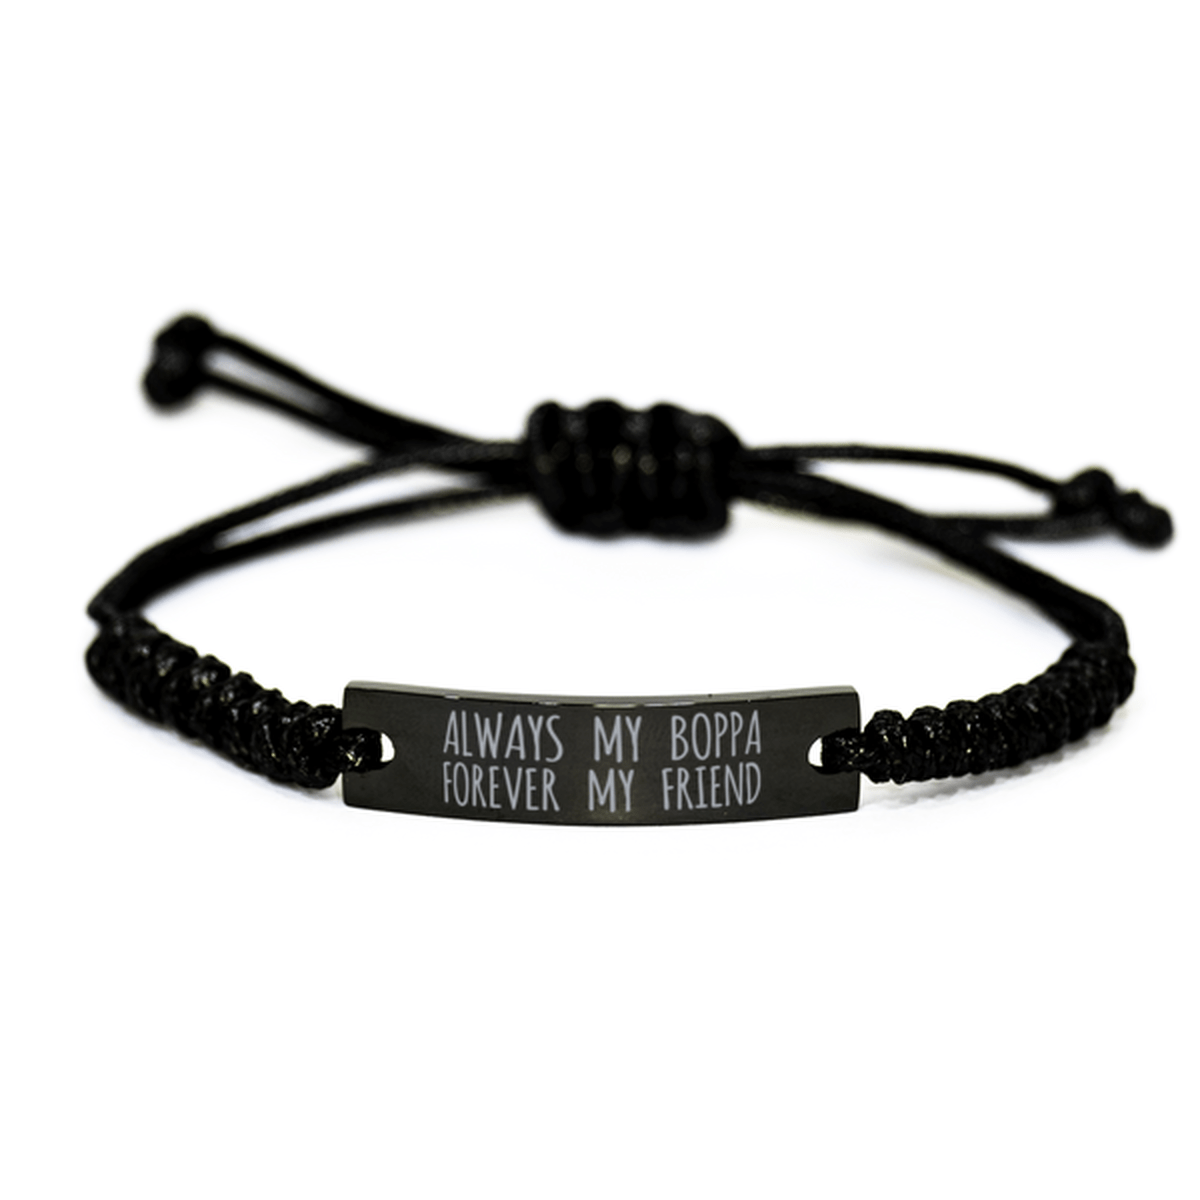 Inspirational Boppa Black Rope Bracelet, Always My Boppa Forever My Friend, Best Birthday Gifts For Family